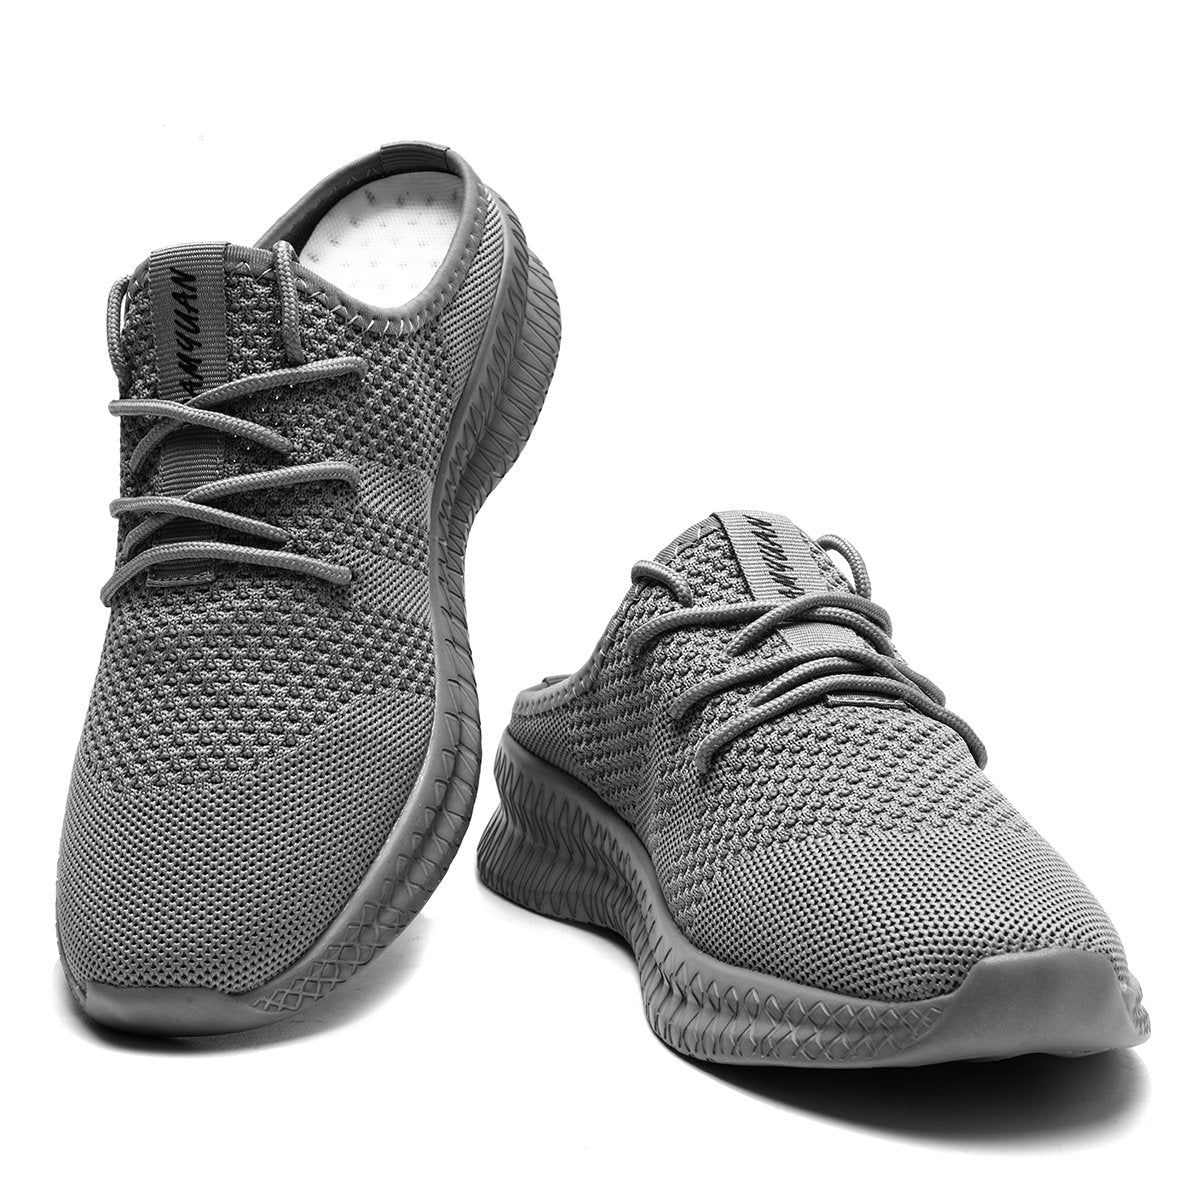 Damyuan Breathable Anti-slip Sandals